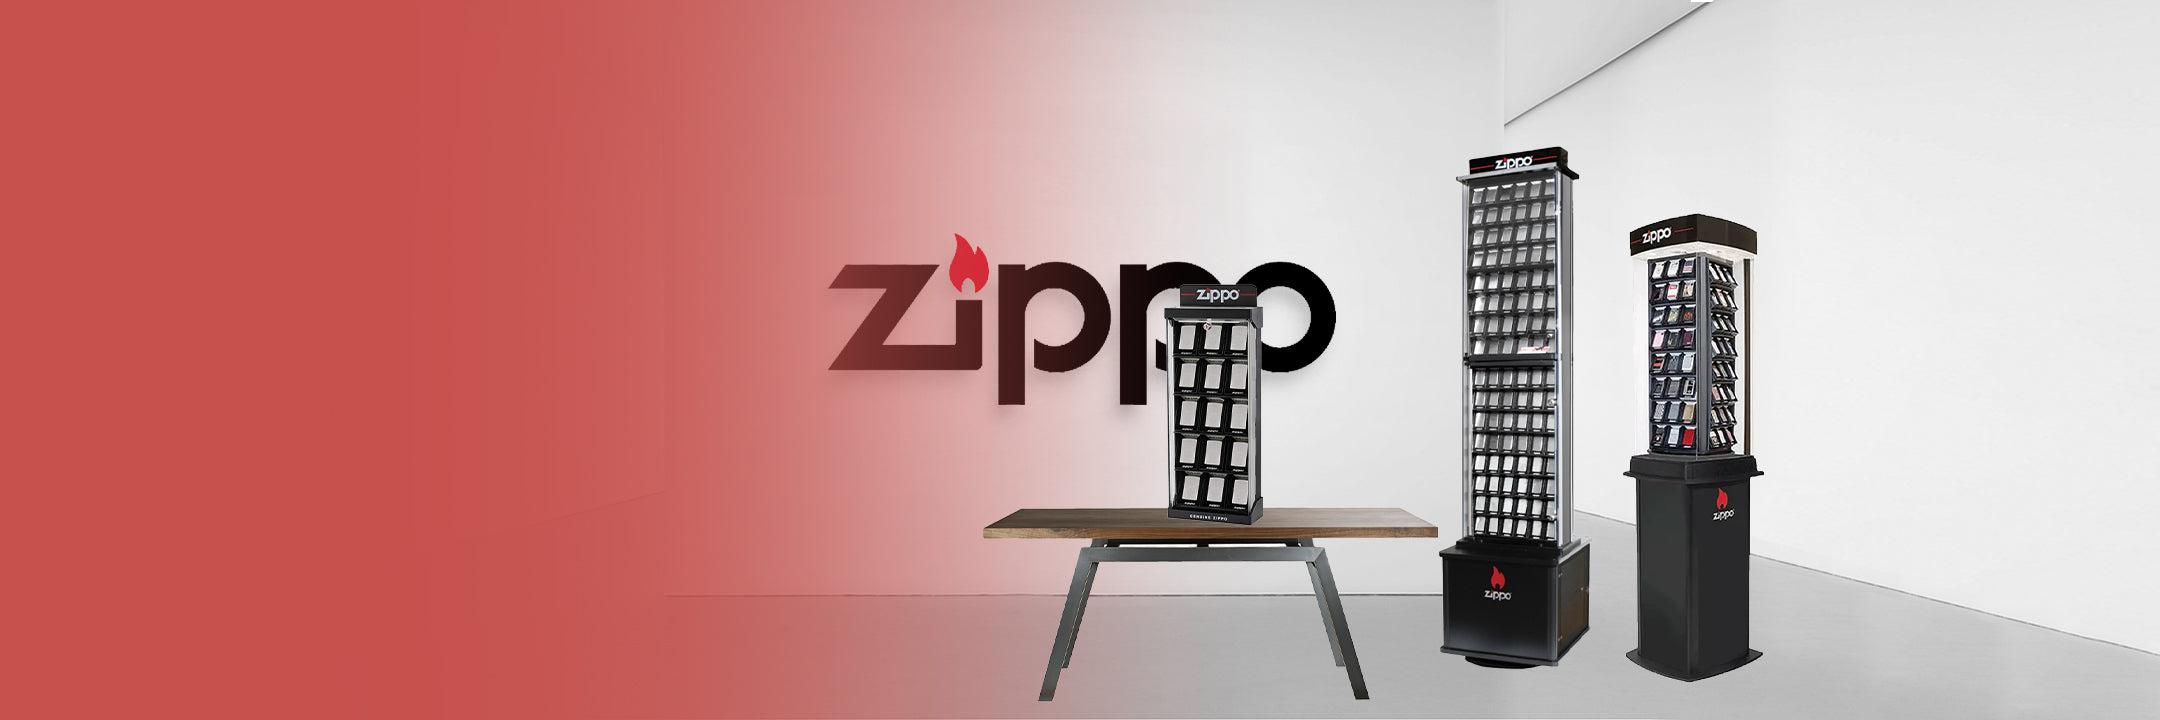 Lucas Wholesale | Zippo Display Marketing